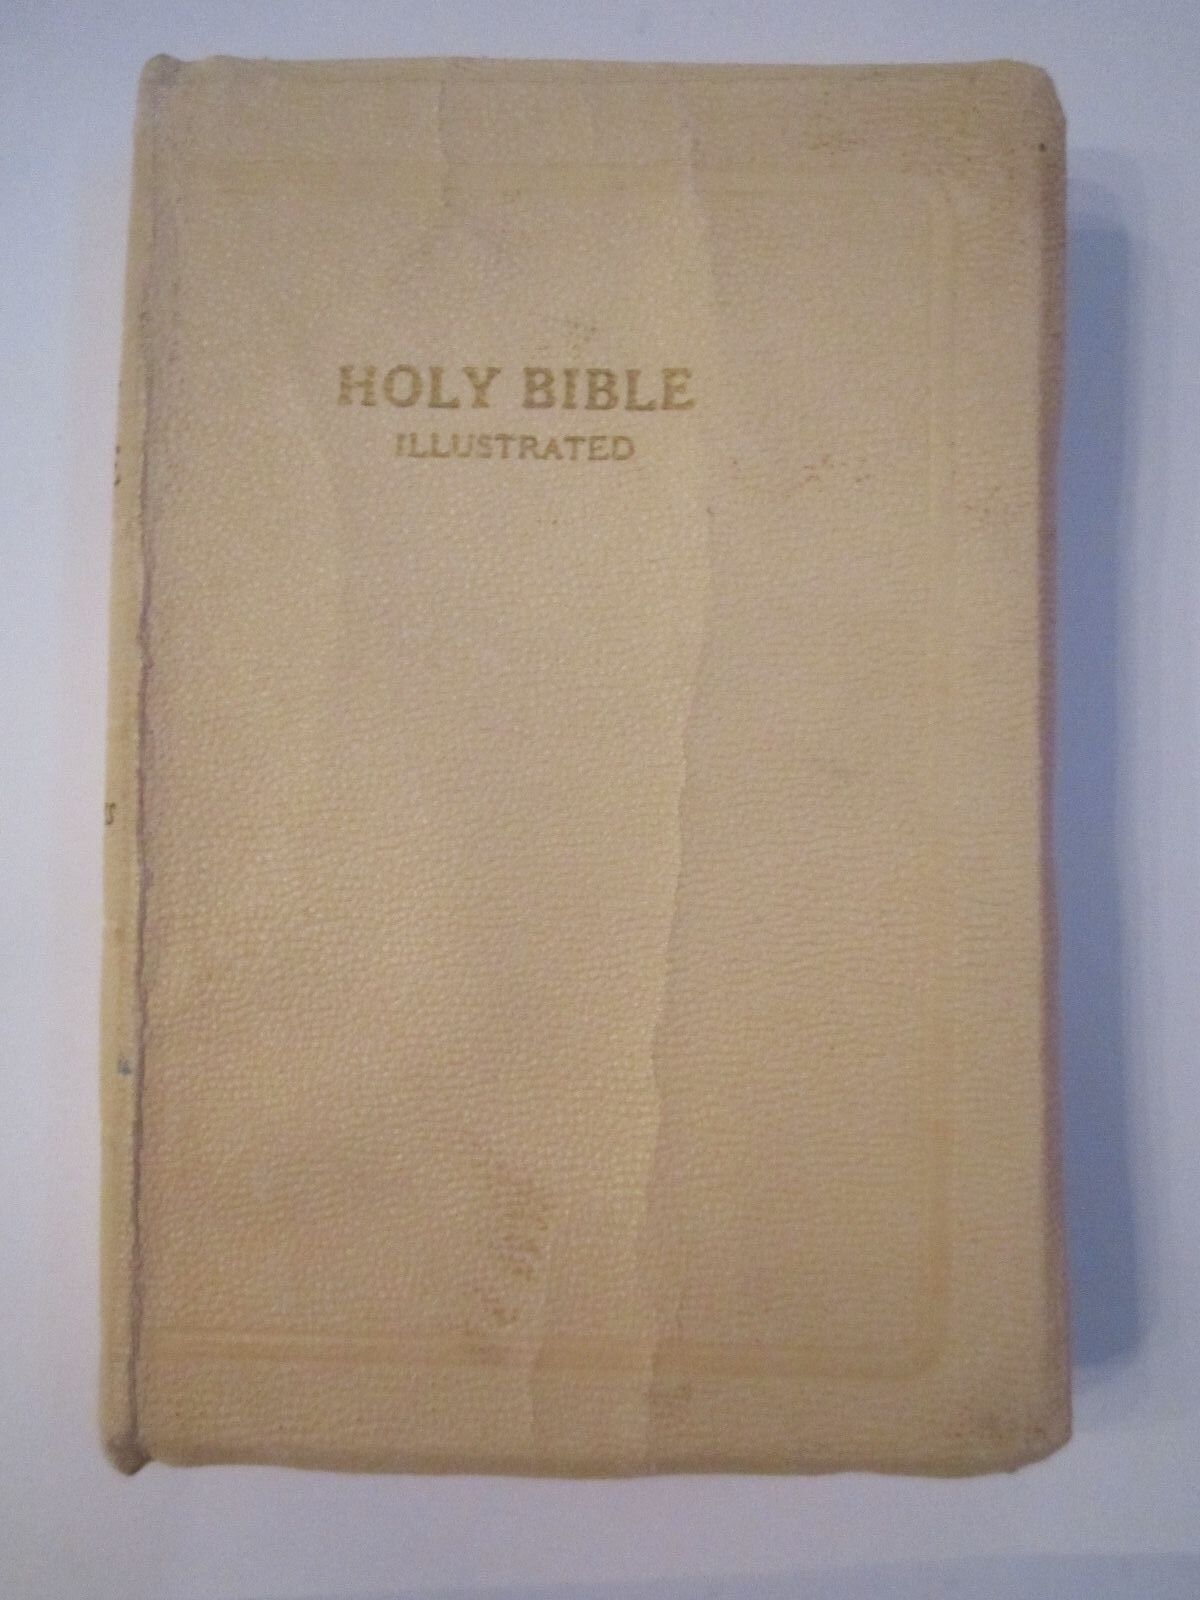 1966 KING JAMES VERSION WORLD BIBLE - NICE ILLUSTRATIONS - BN-12